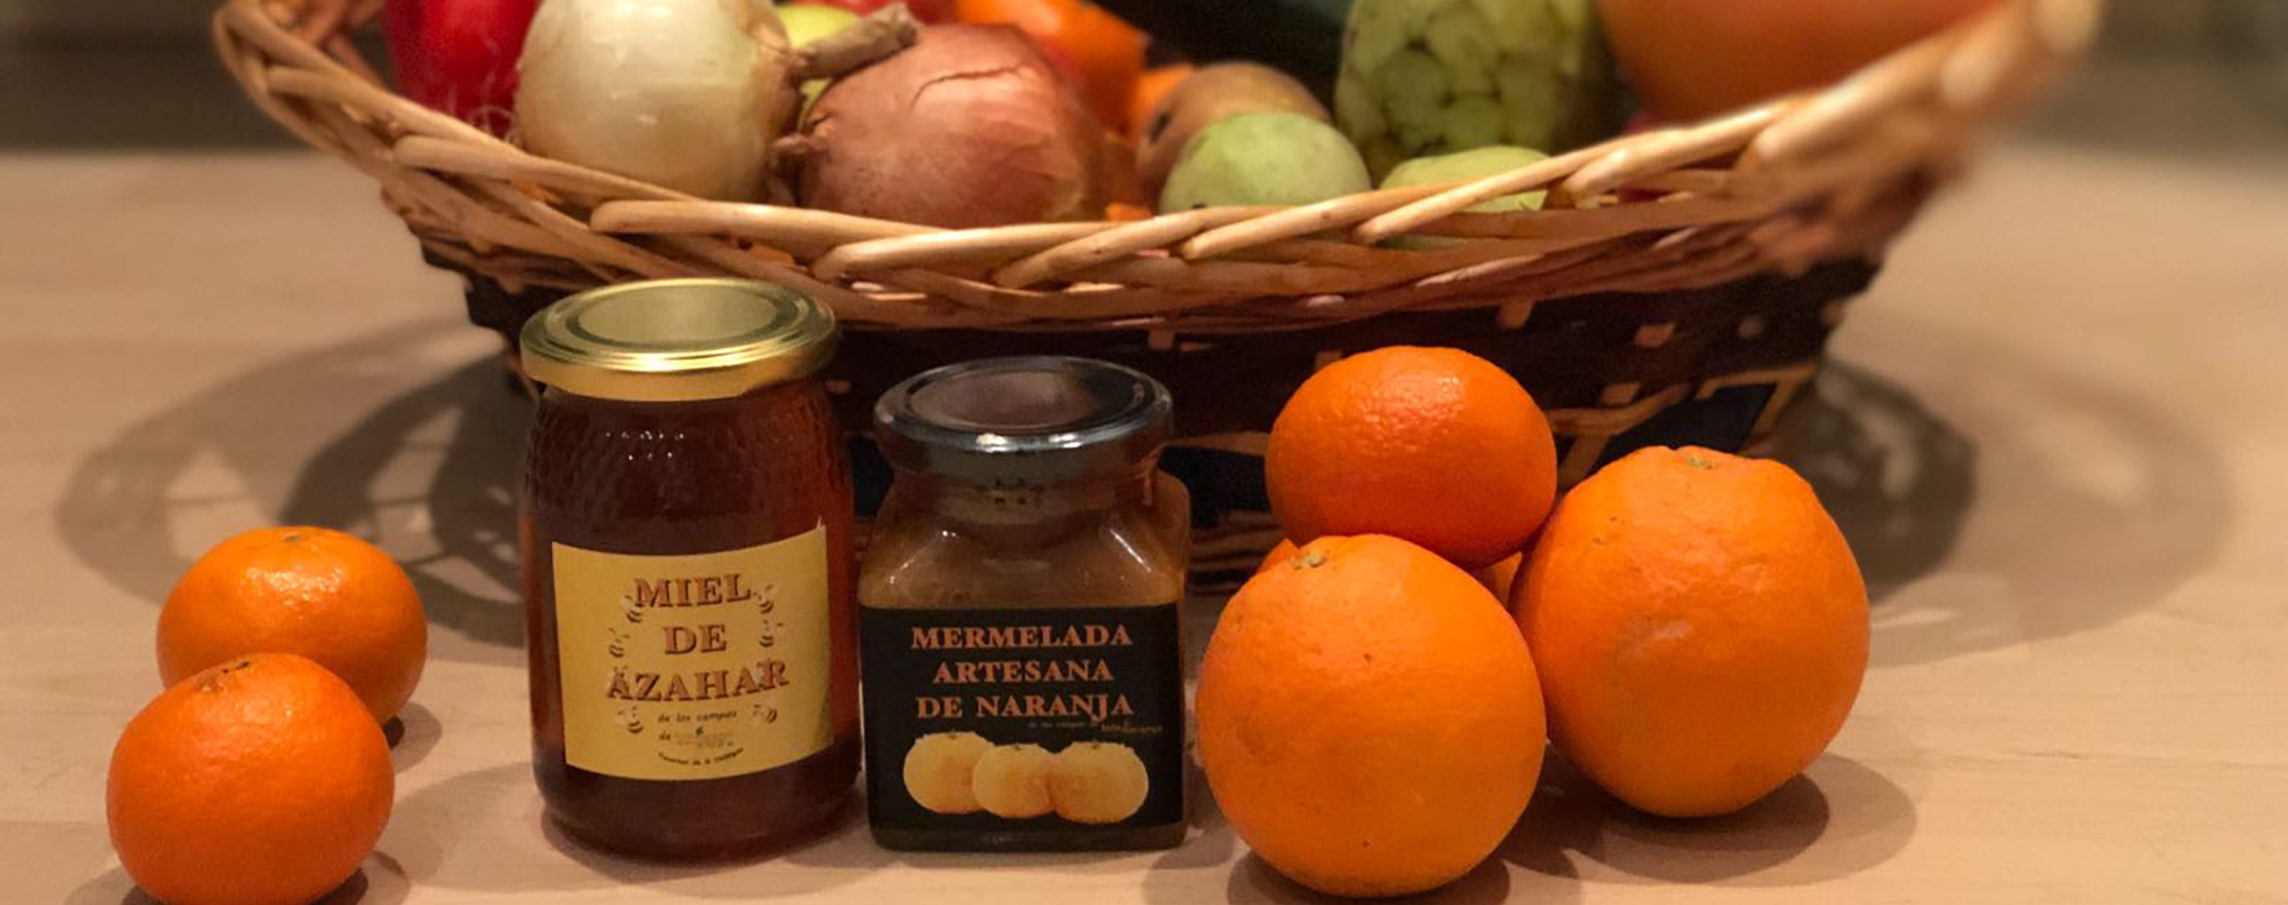 miel-artesana-cesta-fruta-verdura-telenaranja